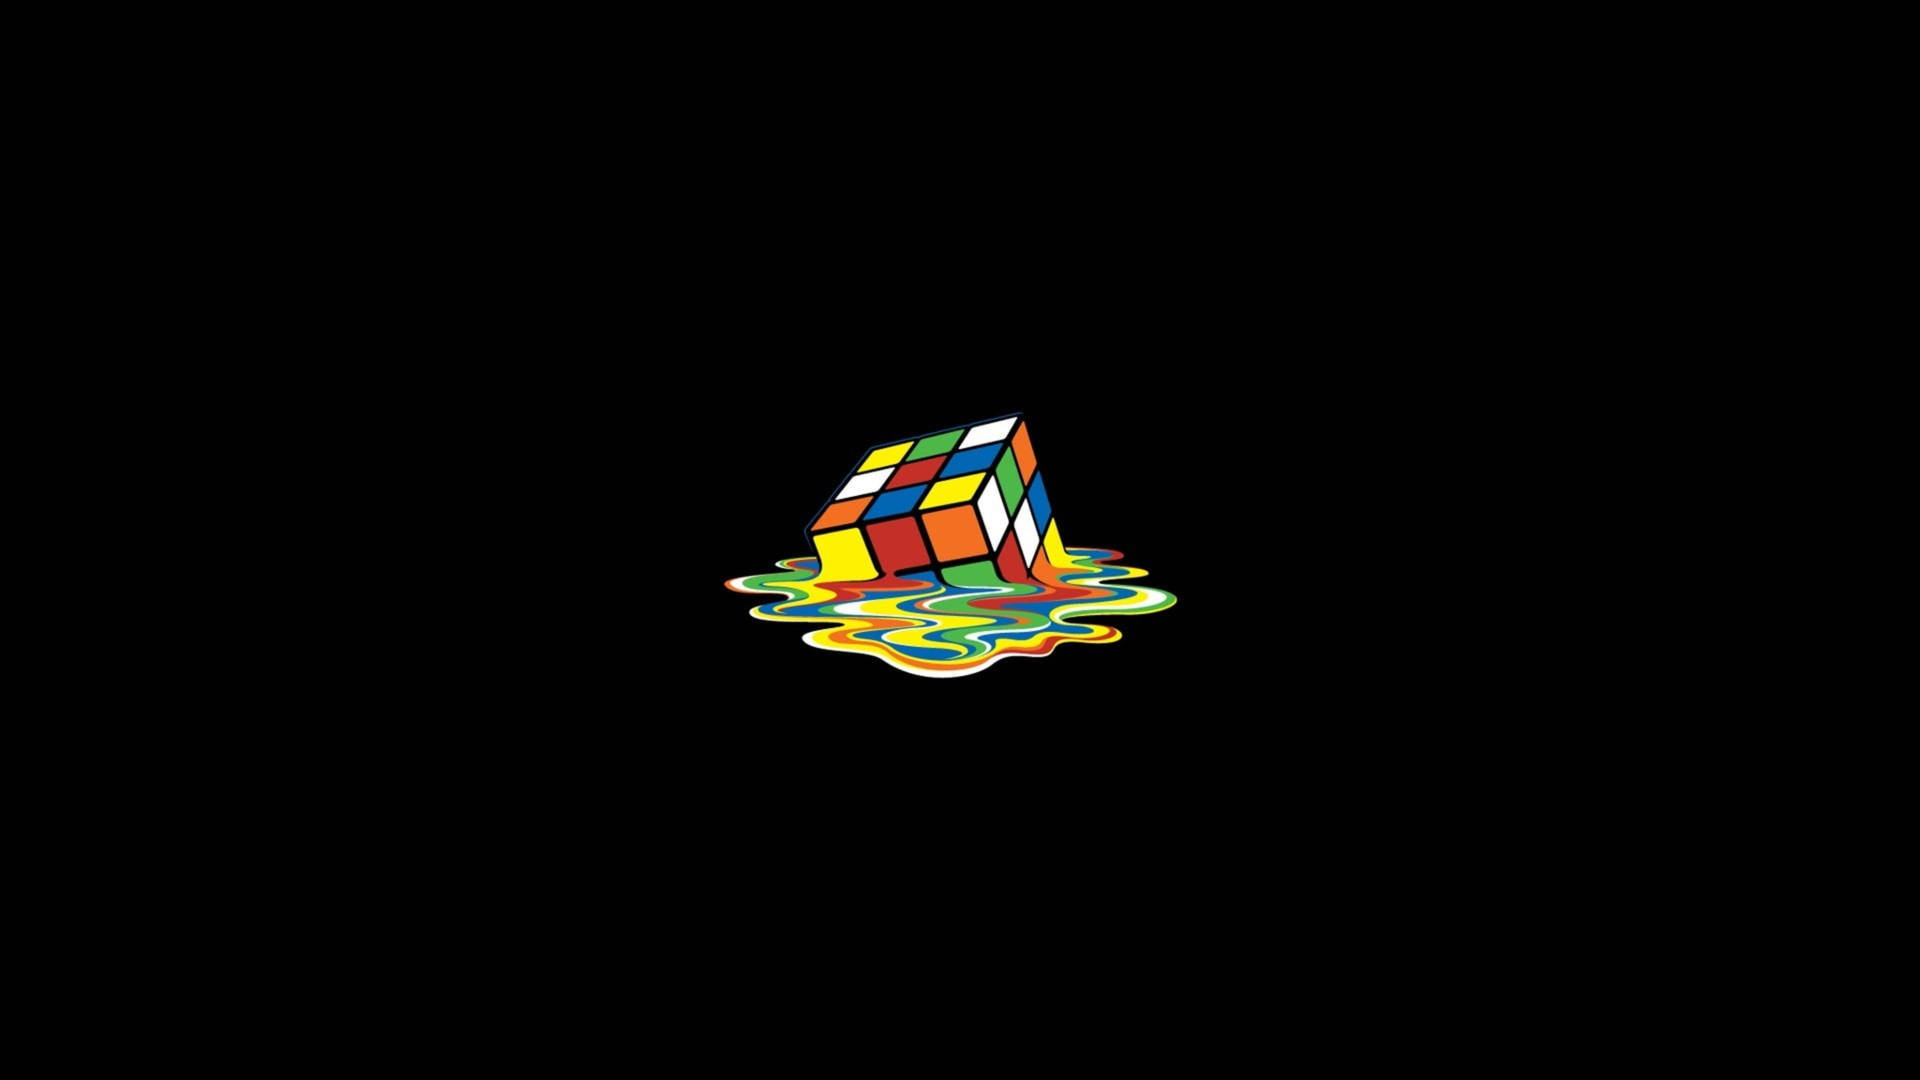 Melting Rubik's Cube Dark Abstract